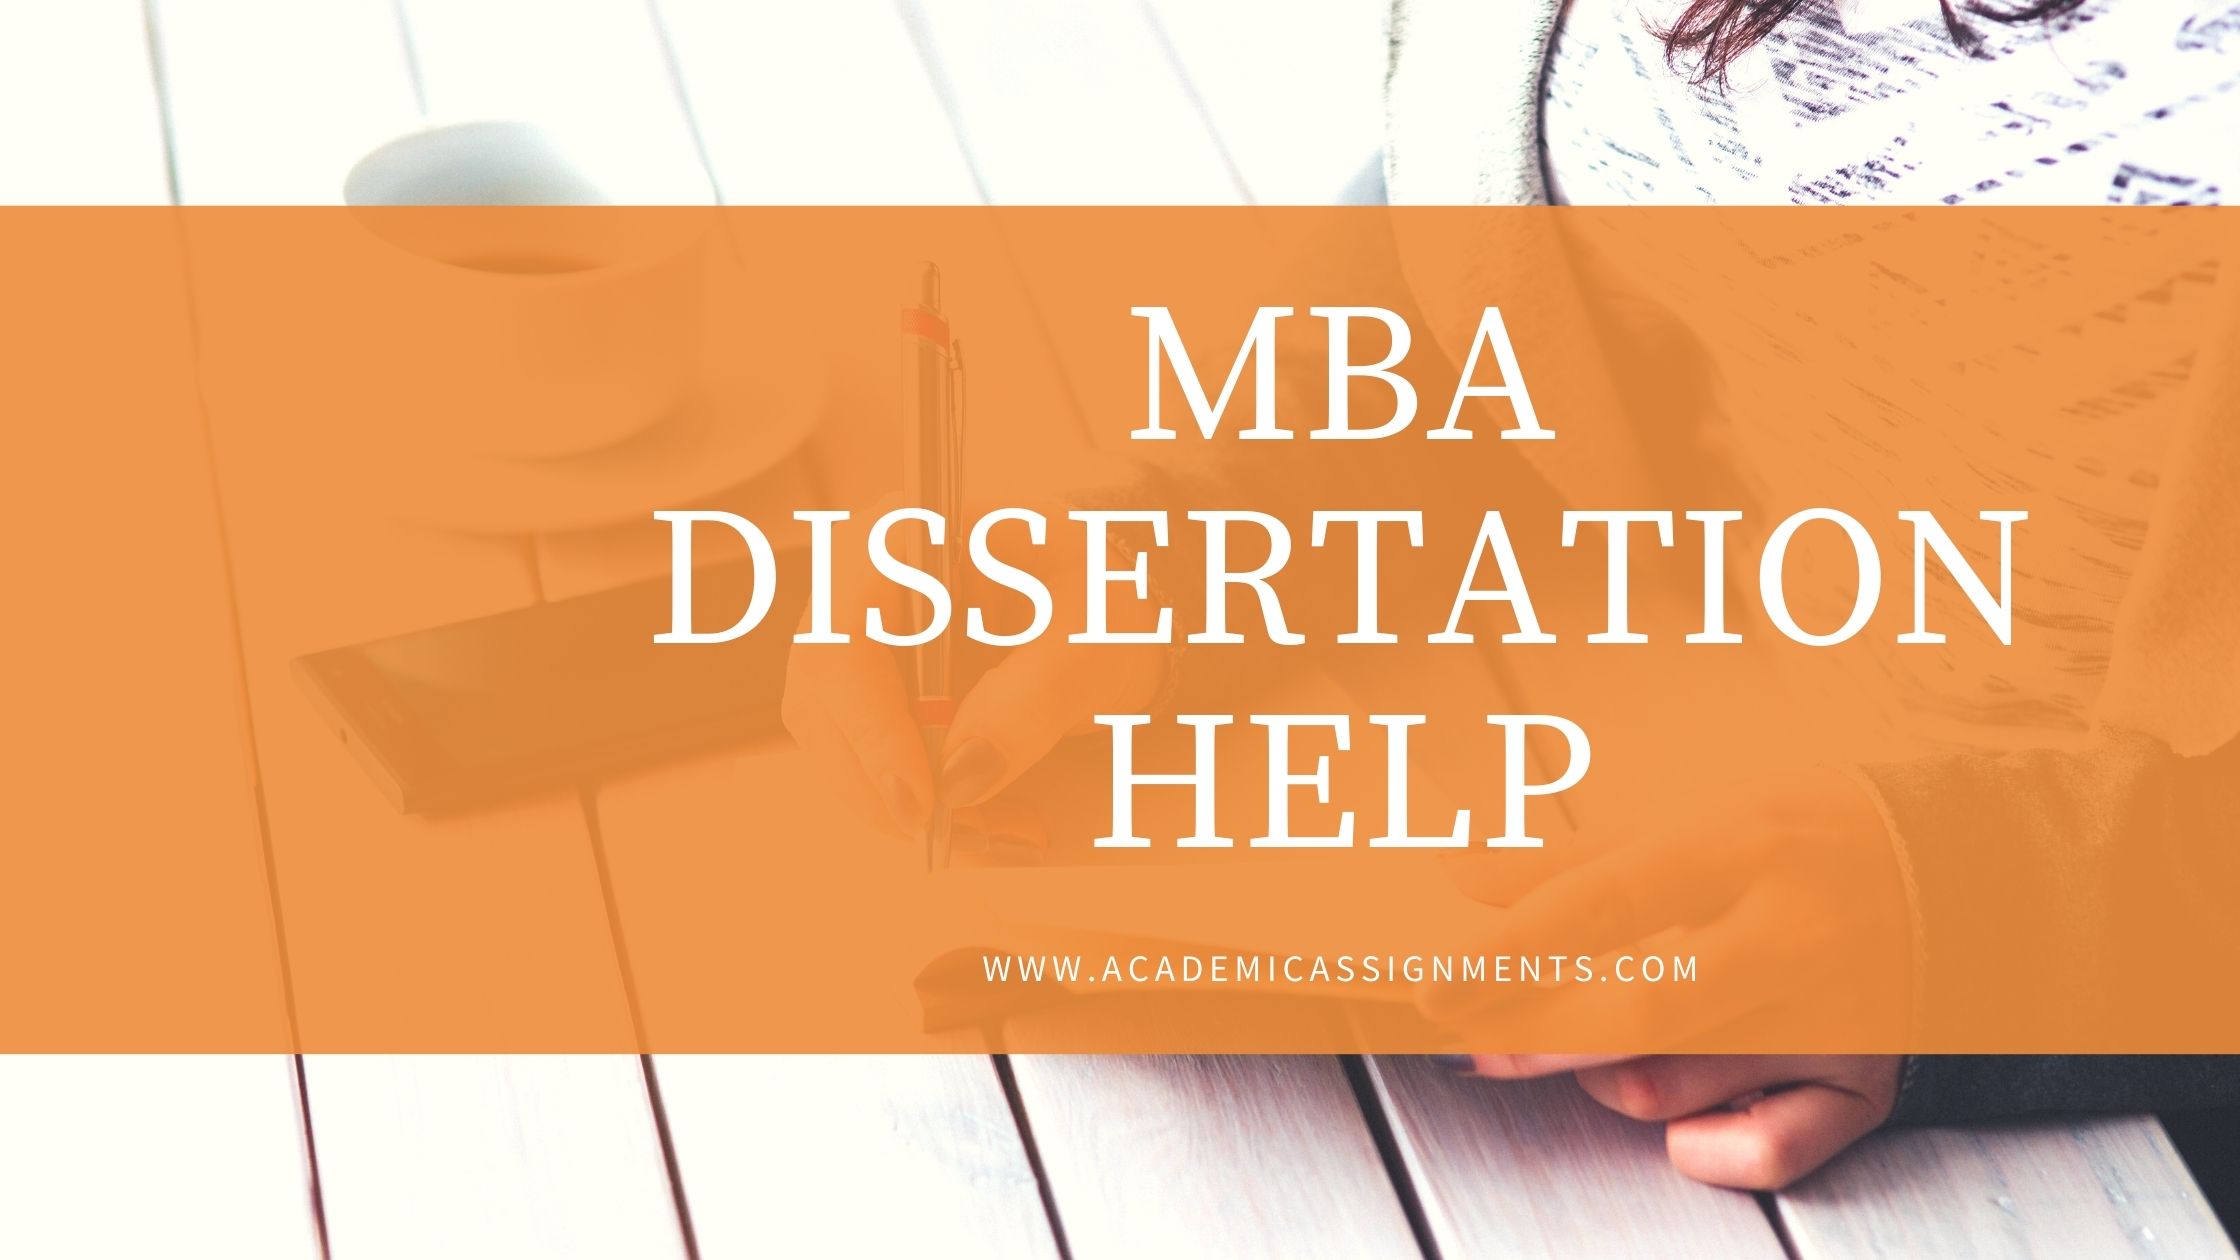 MBA DISSERTATION HELP